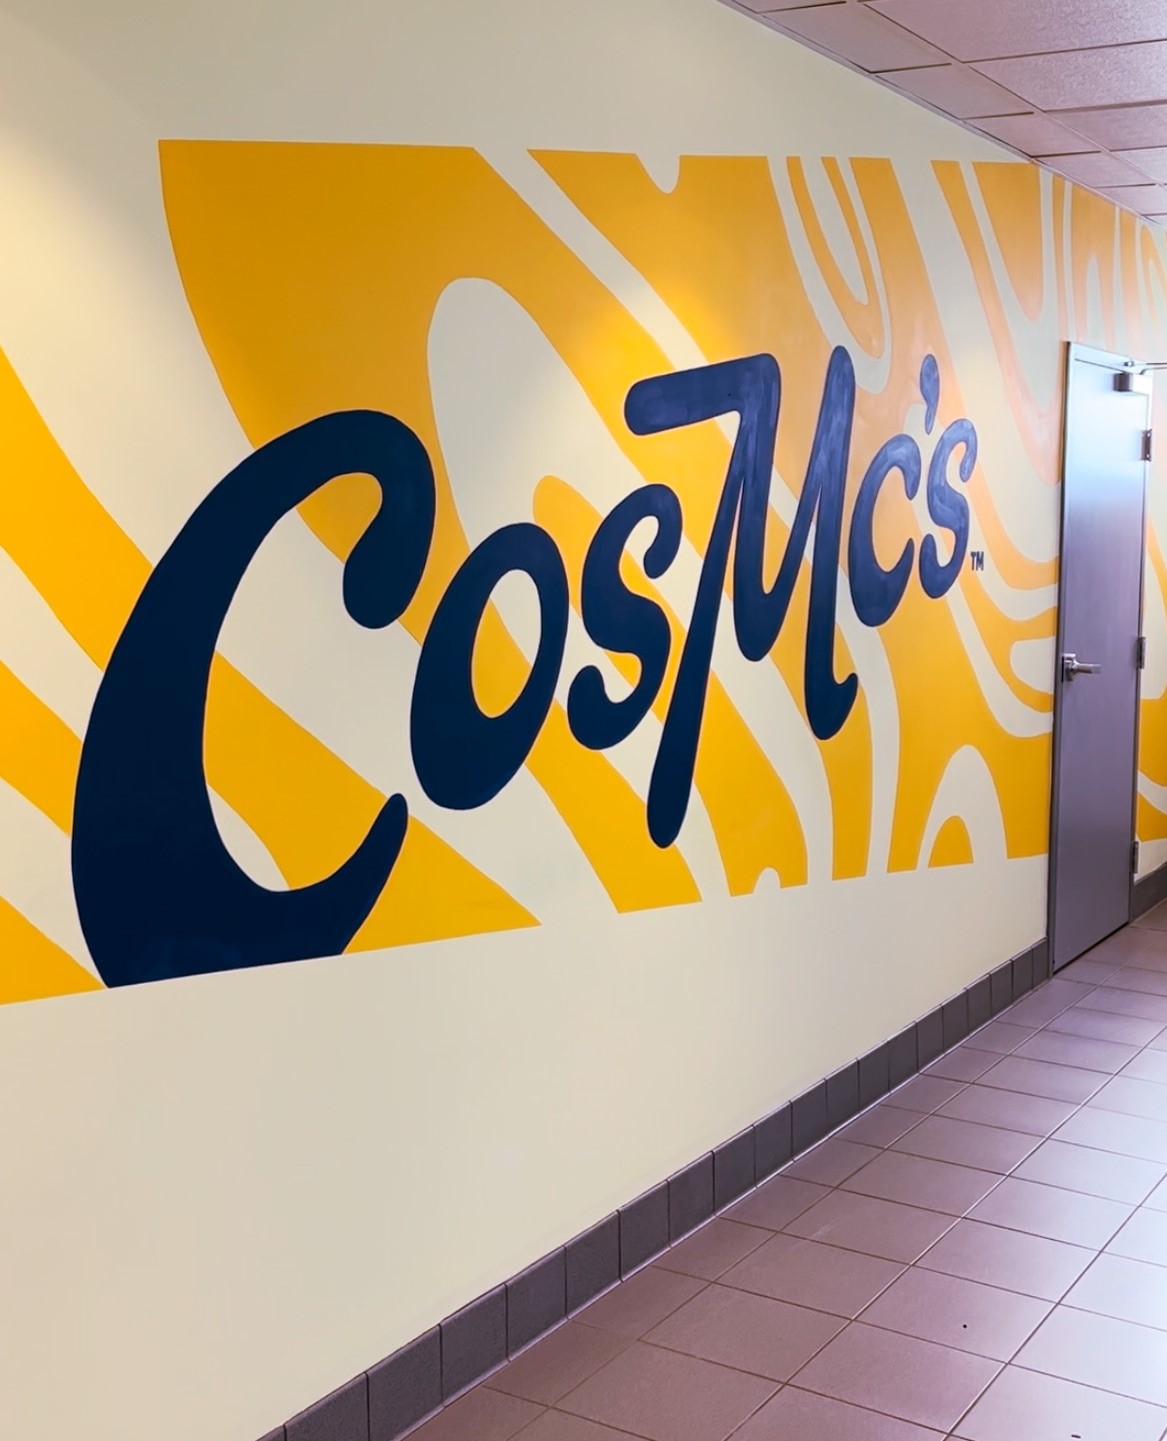 Peek inside CosMc’s, McDonald’s glimmering challenge to Starbucks